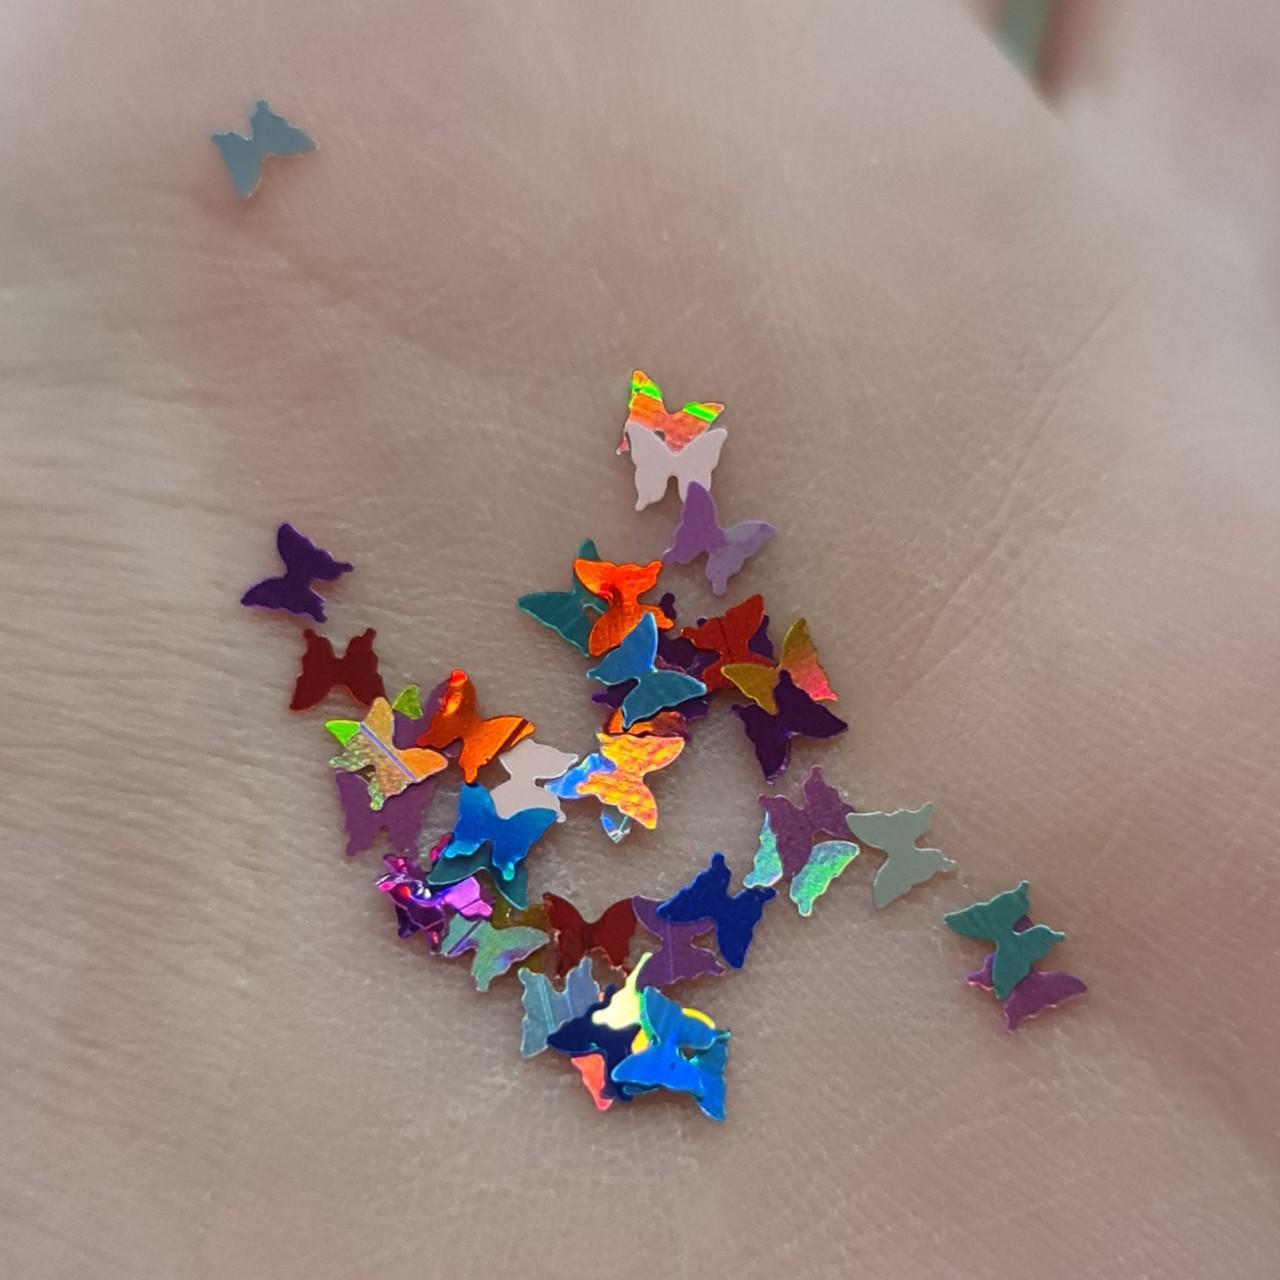 Product Image 4 - Loose glitter multicolour butterflys pot.
Suitable